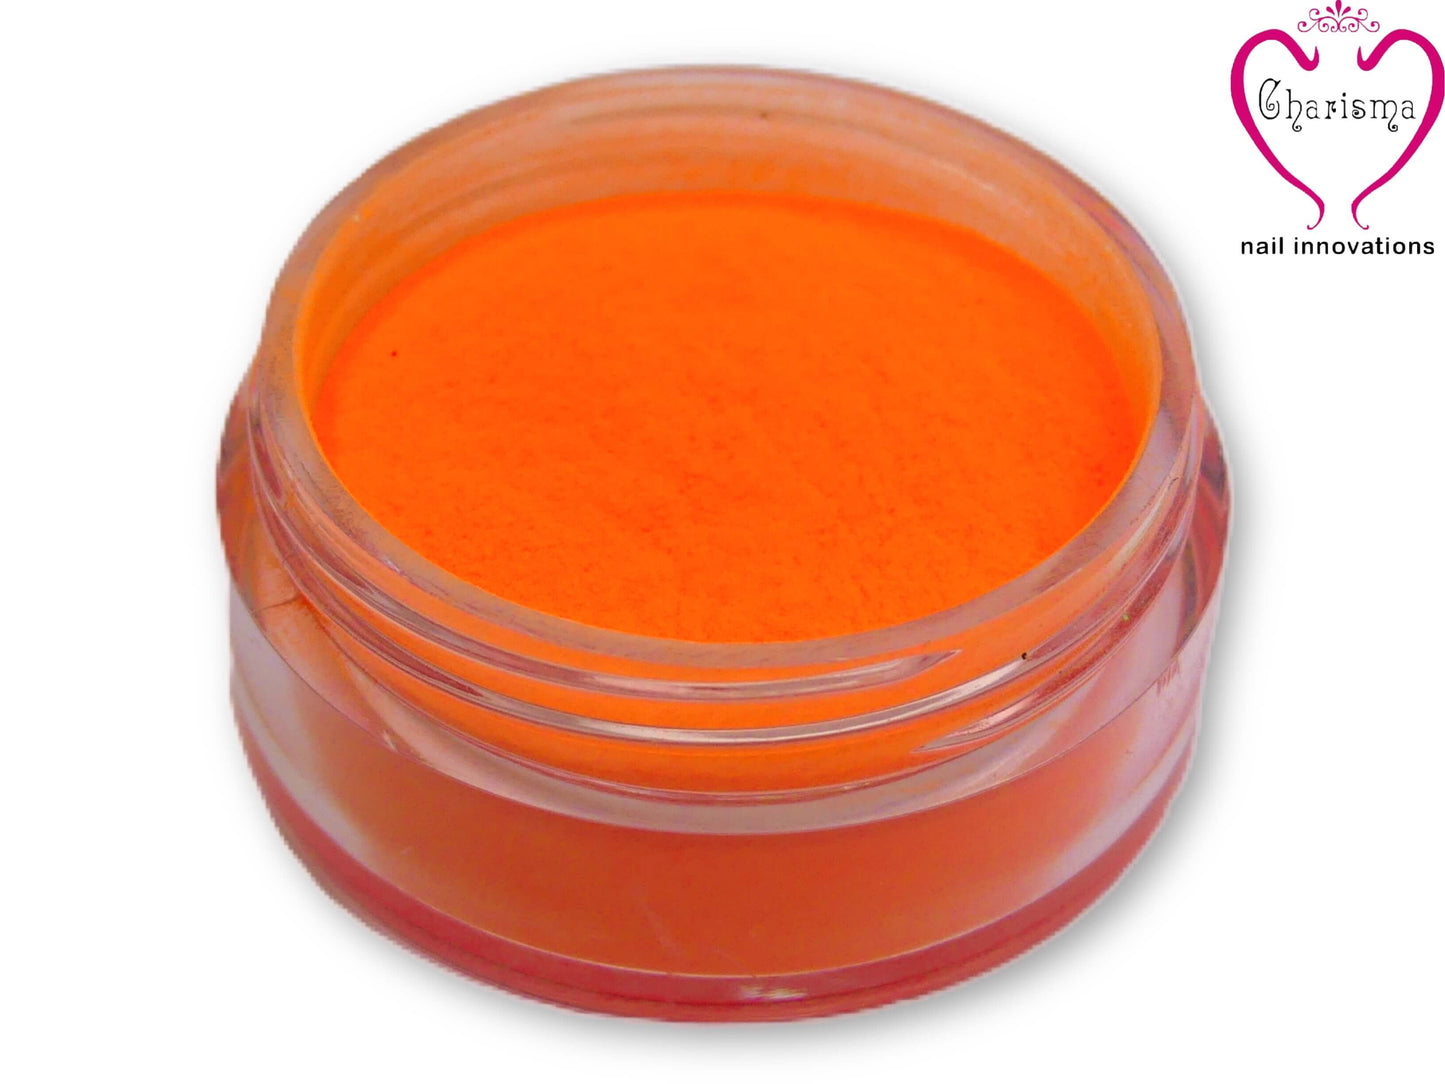 Load image into Gallery viewer, Charisma Nail Acrylic Powder - Neon Orange - My Little Nail Art Shop
